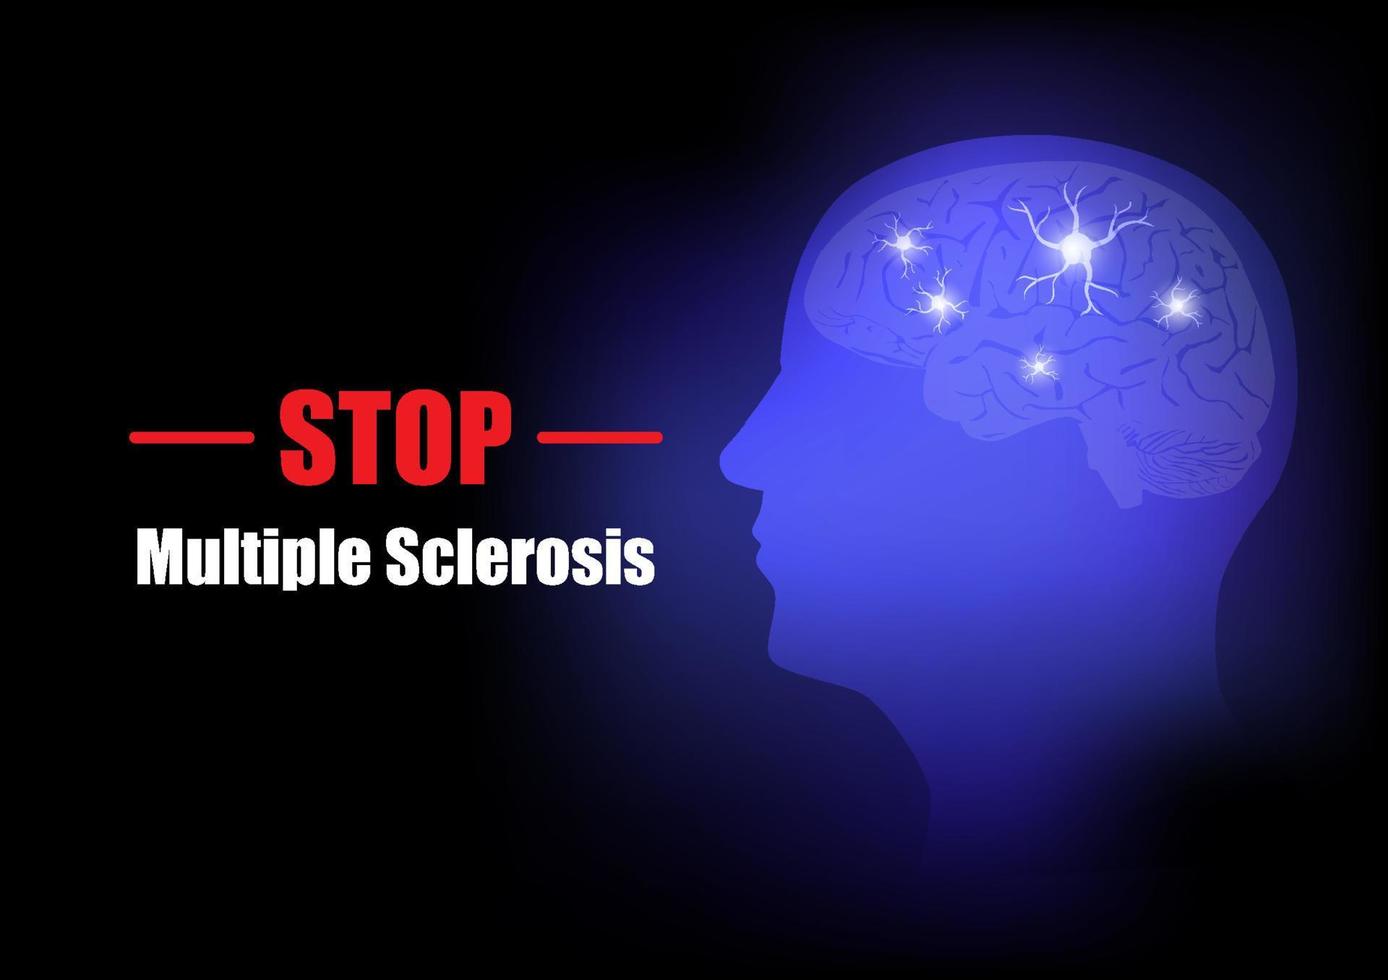 parar a esclerose múltipla. dia mundial do cérebro vetor